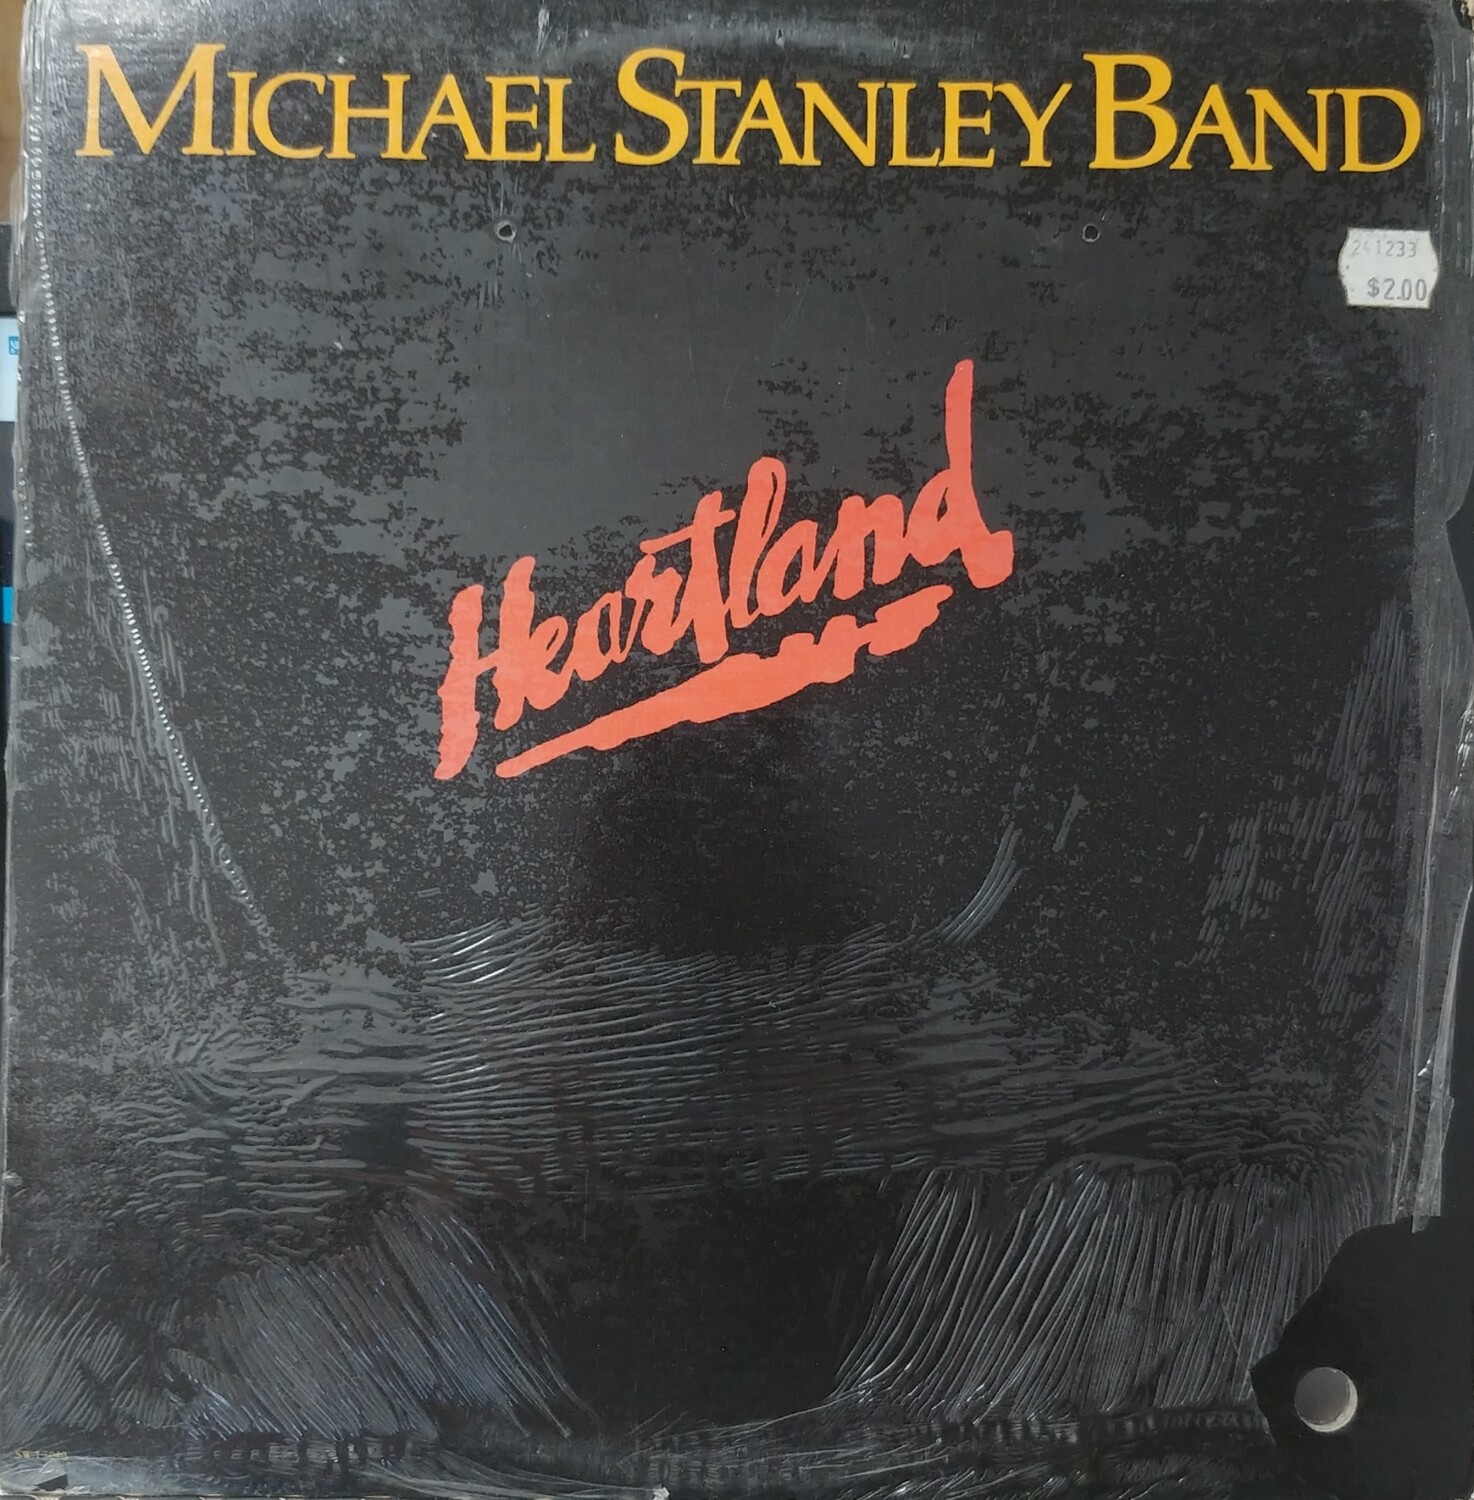 Michael Stanley Band - Heartland